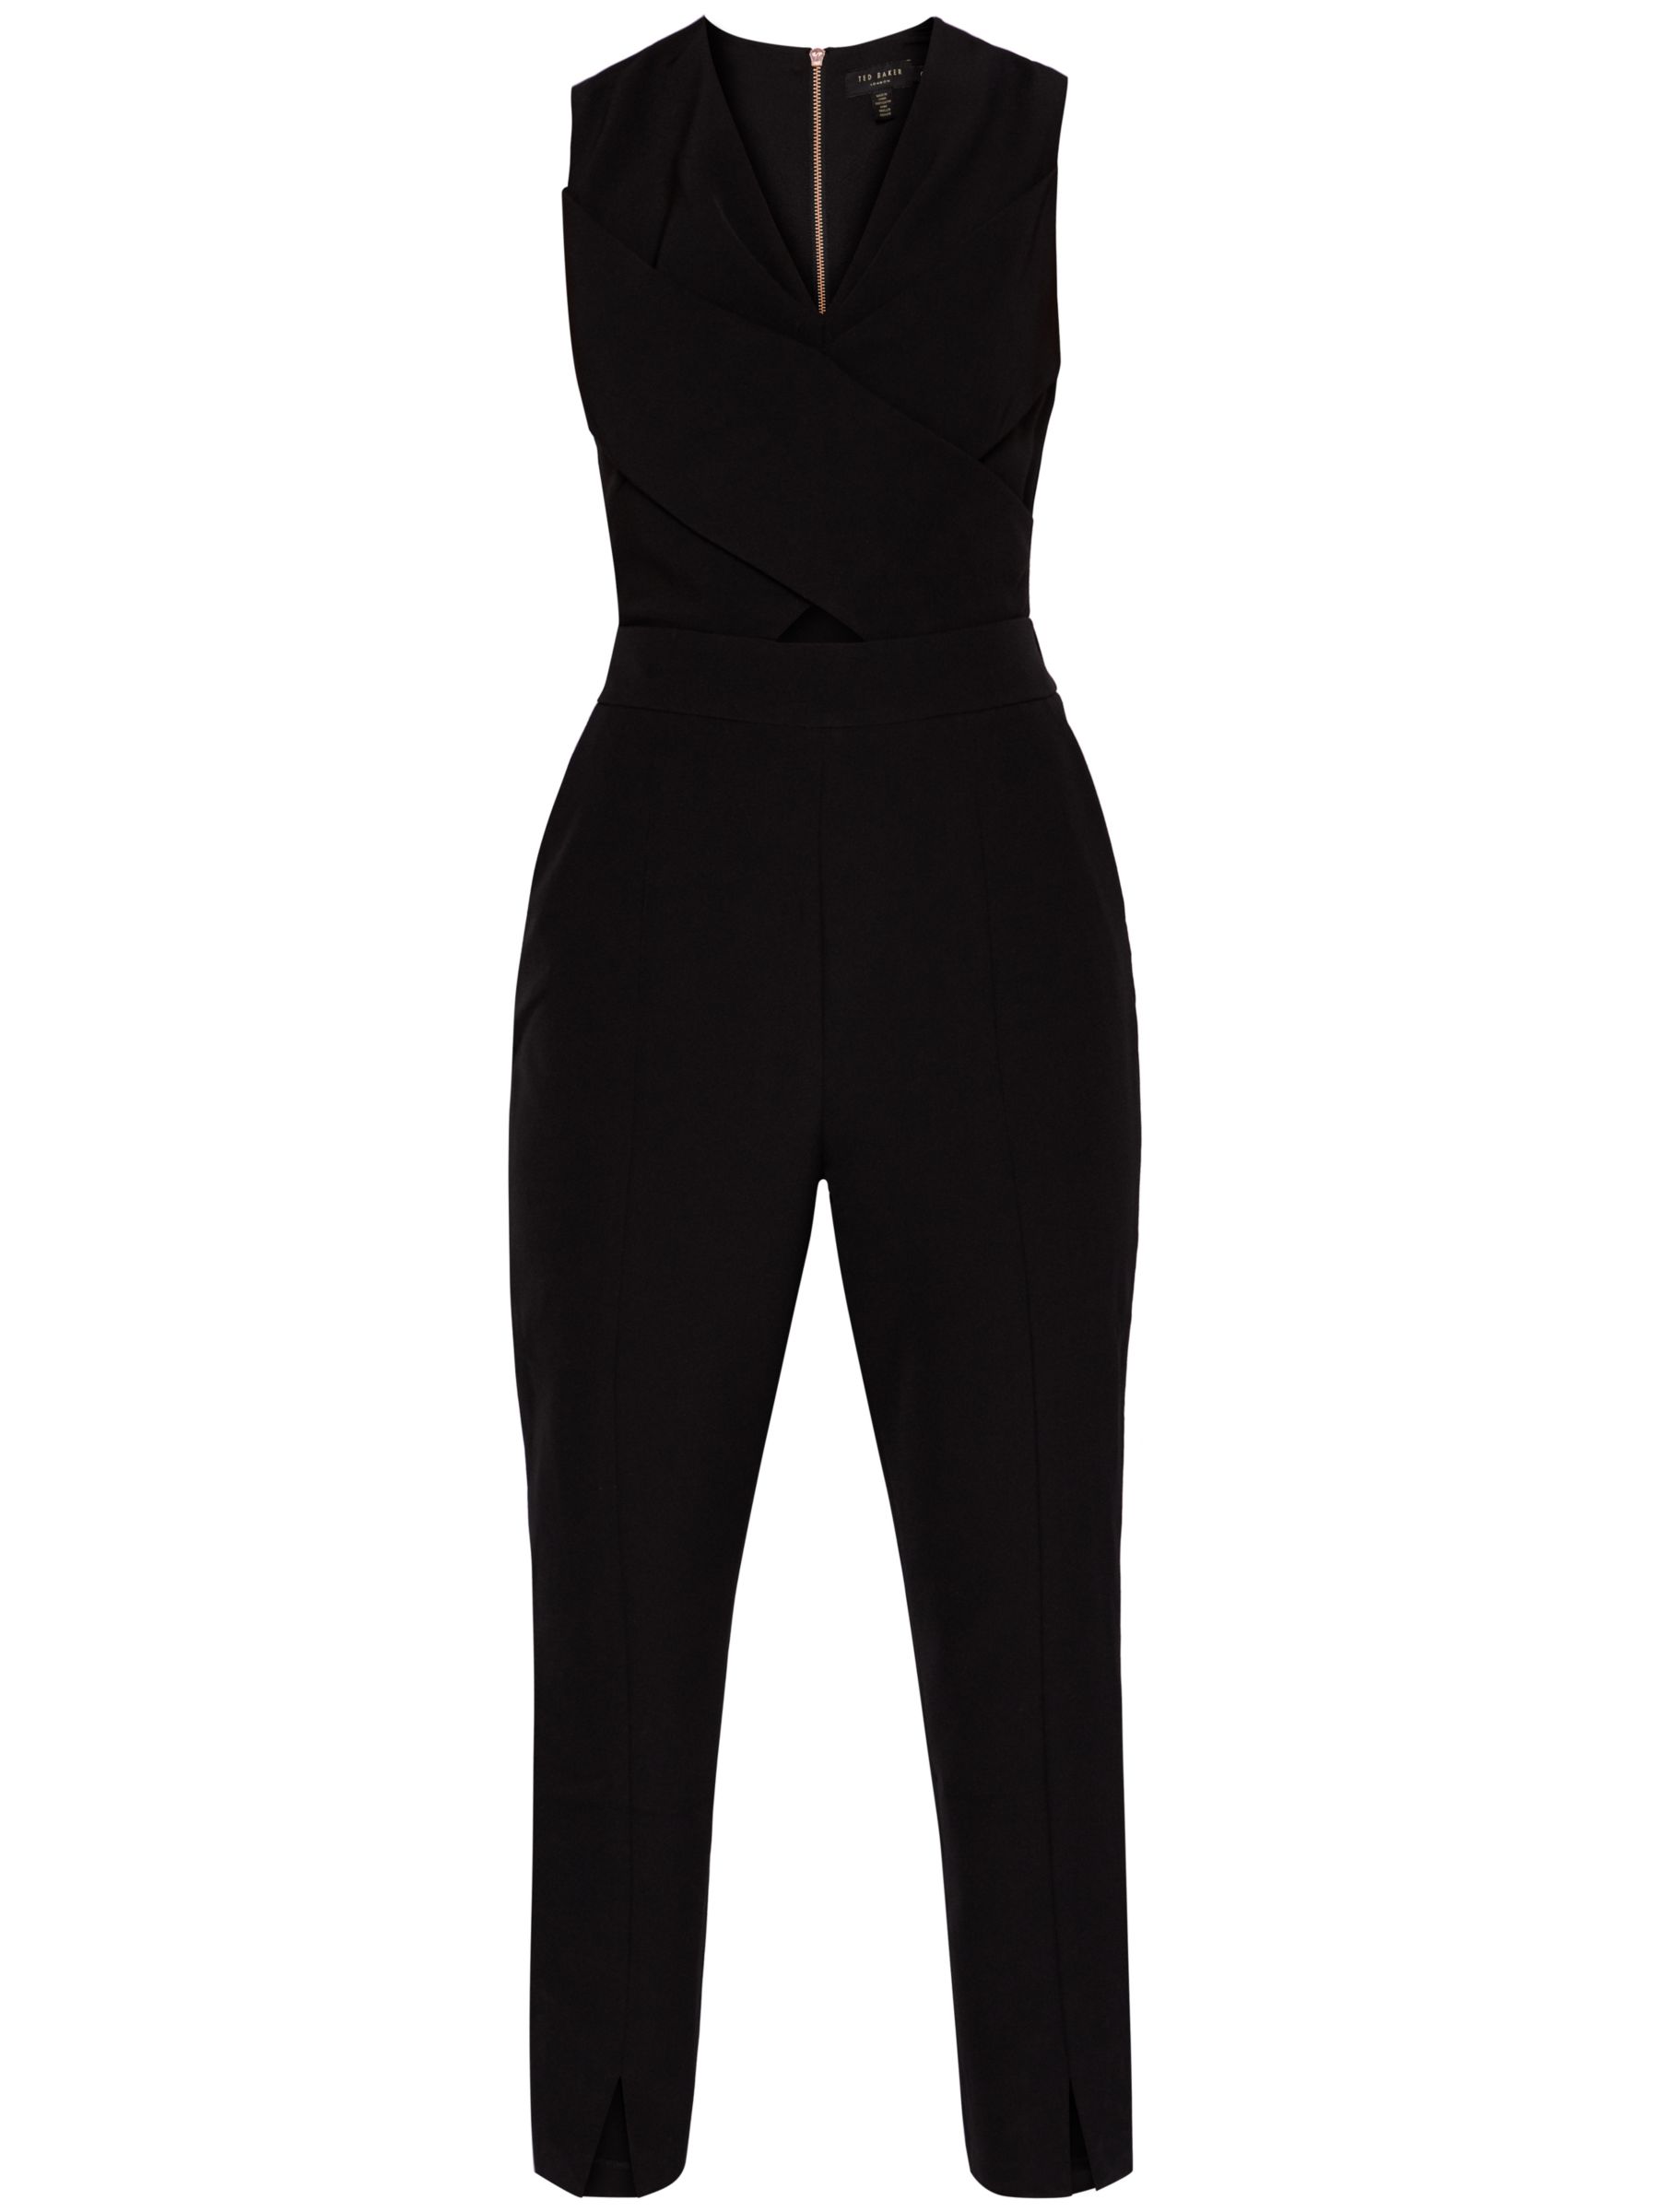 Ted Baker Kleea Cross Front Jumpsuit, Black at John Lewis & Partners